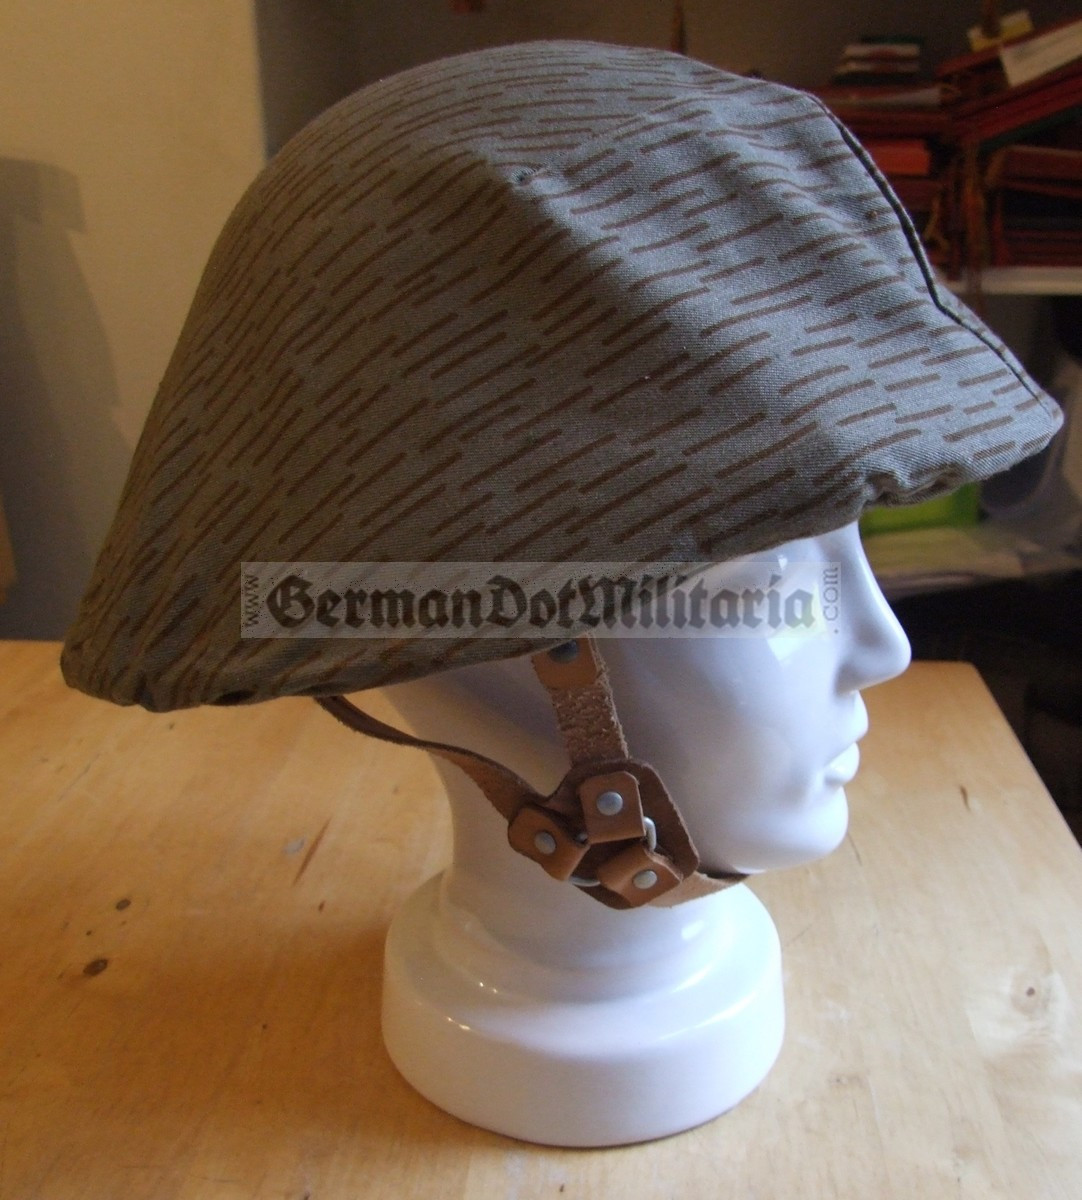 - NVA Strichtarn Helmet hood with net - GermanDotMilitaria